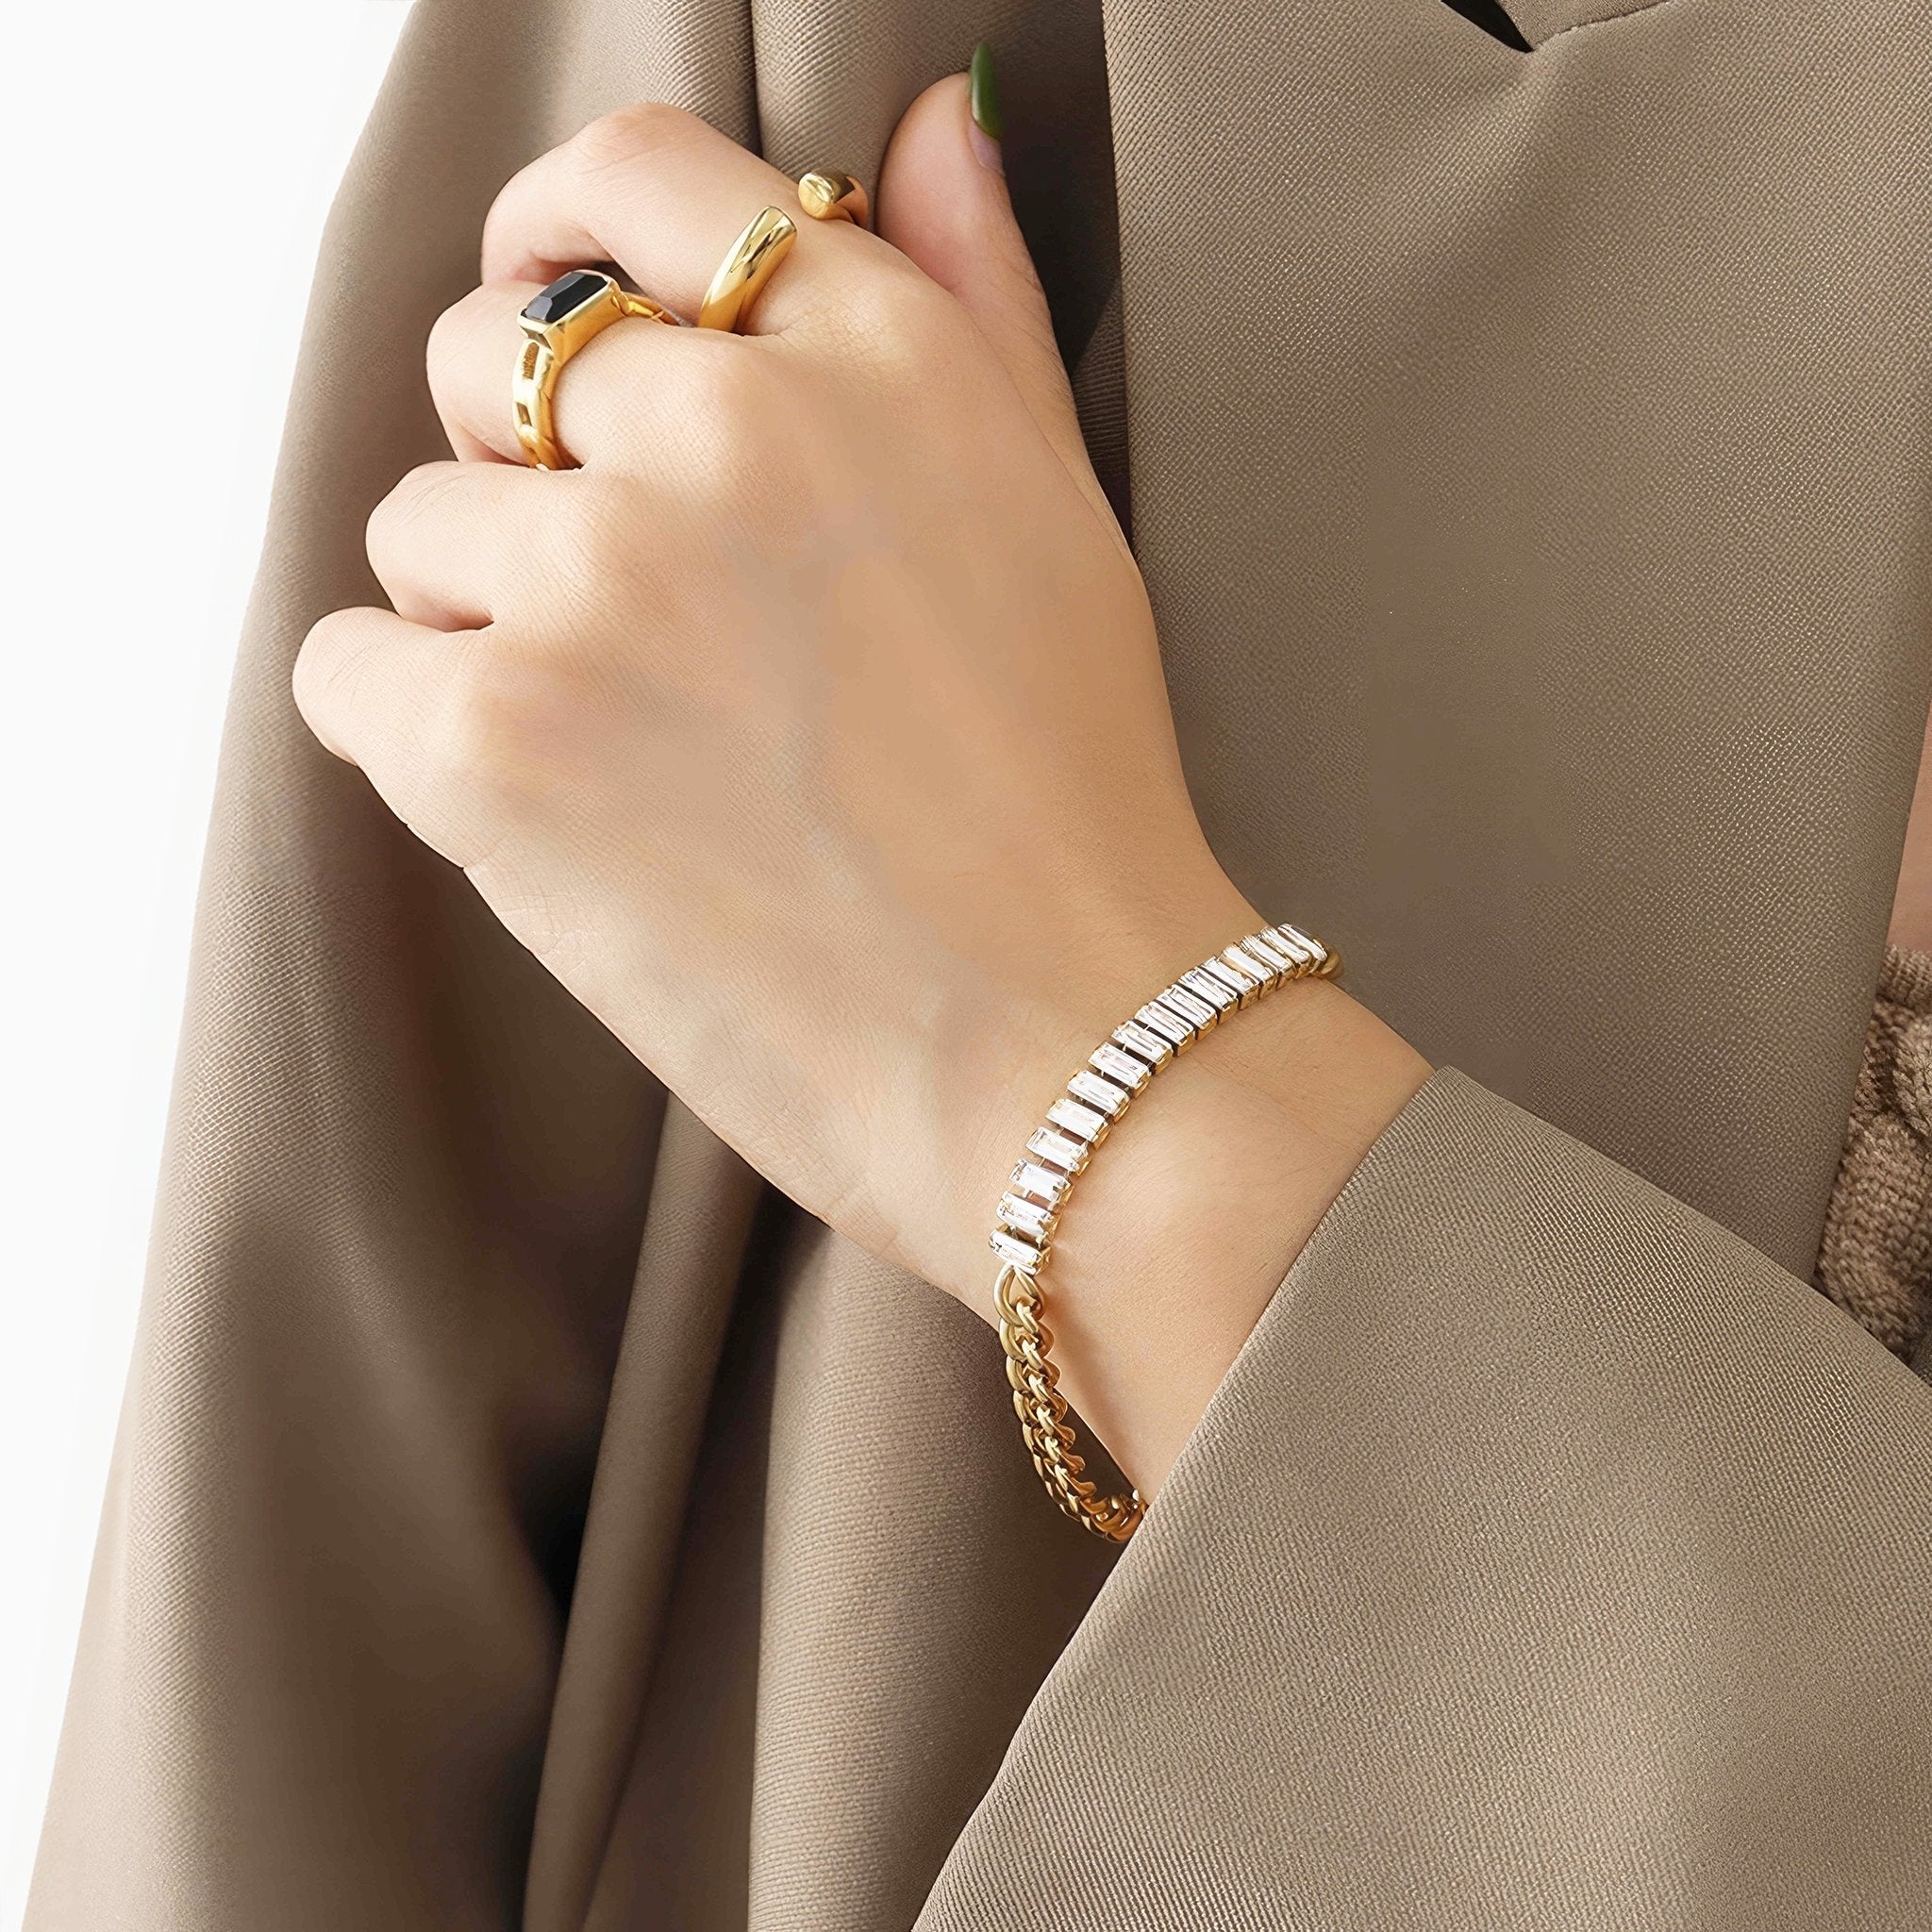 Gemstone Stitching Chain Bracelet - Nobbier - Bracelet - 18K Gold And Titanium PVD Coated Jewelry